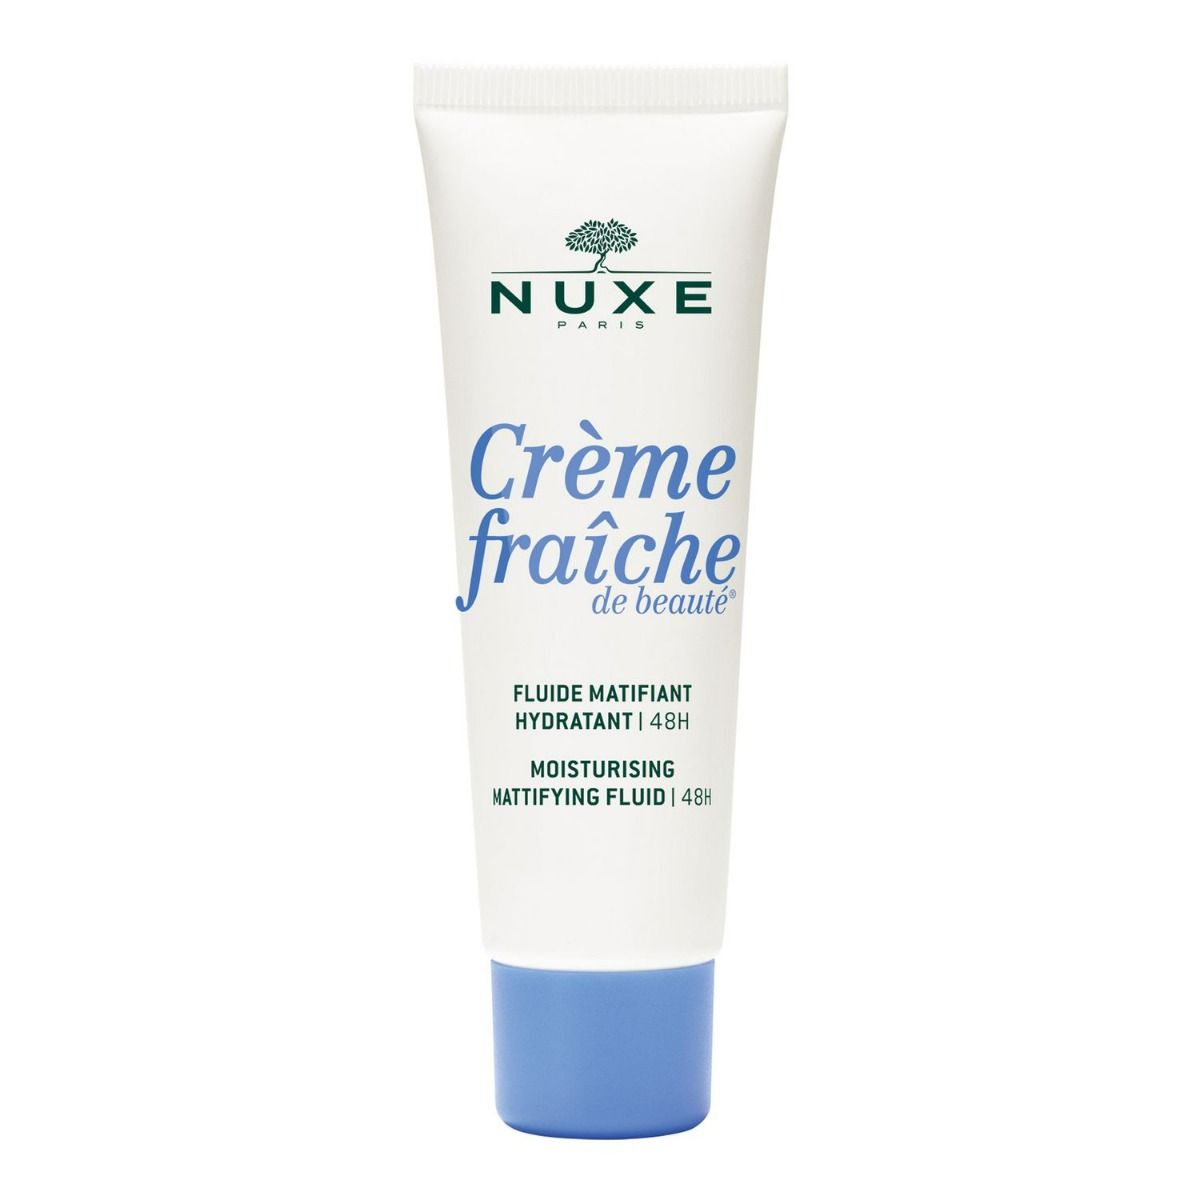 Nuxe Creme Fraiche de Beaute крем для лица, 50 ml